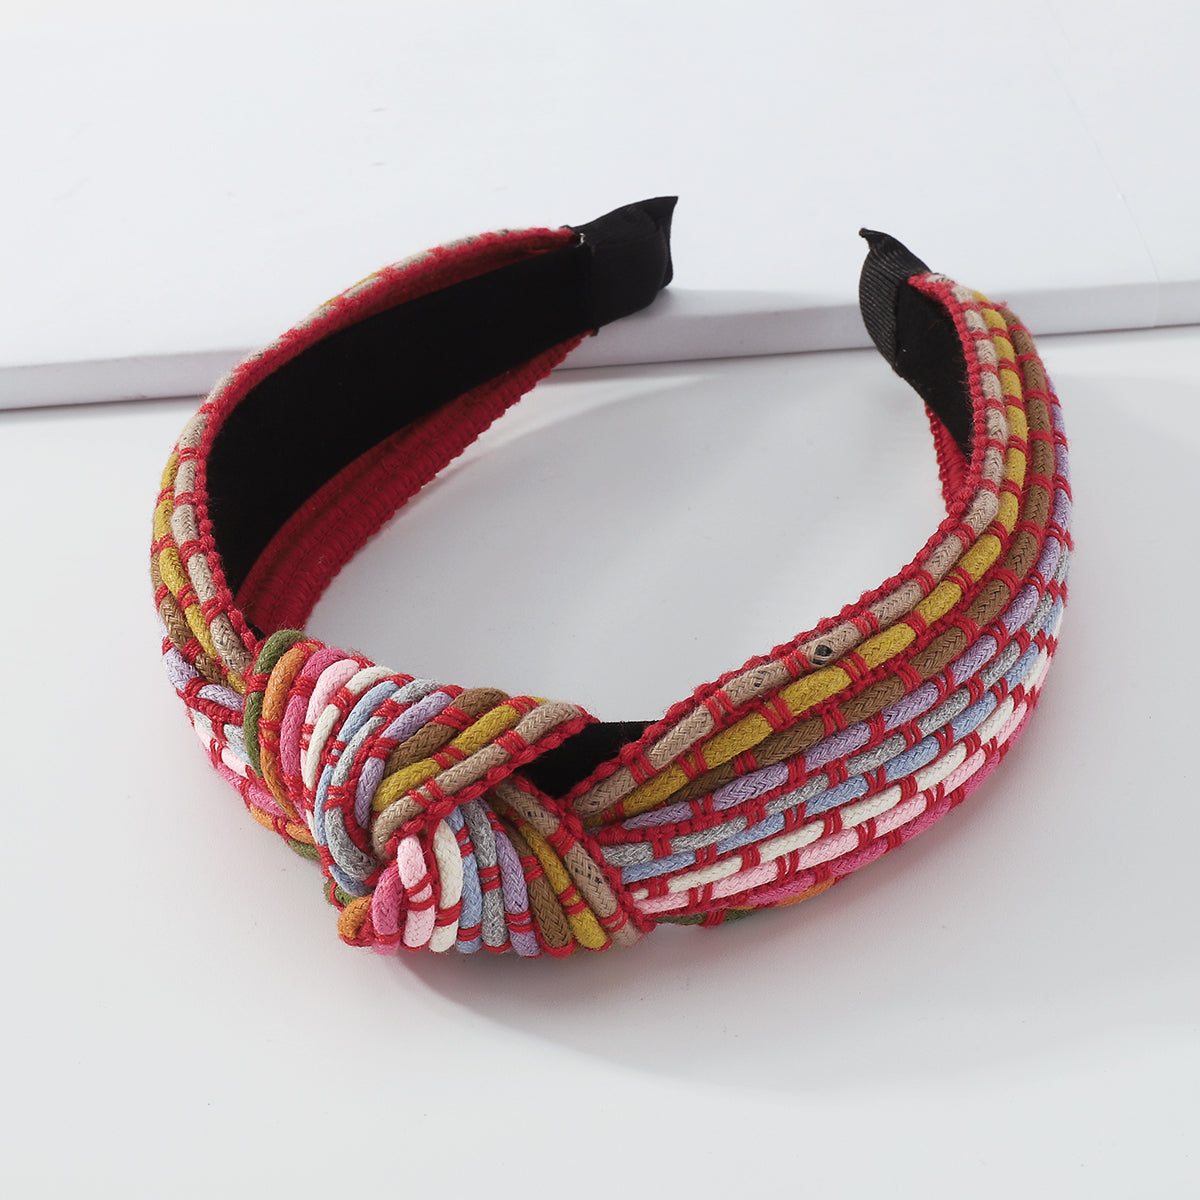 Rainbow Rope Braided Wide Brim Casual Headband medyjewelry